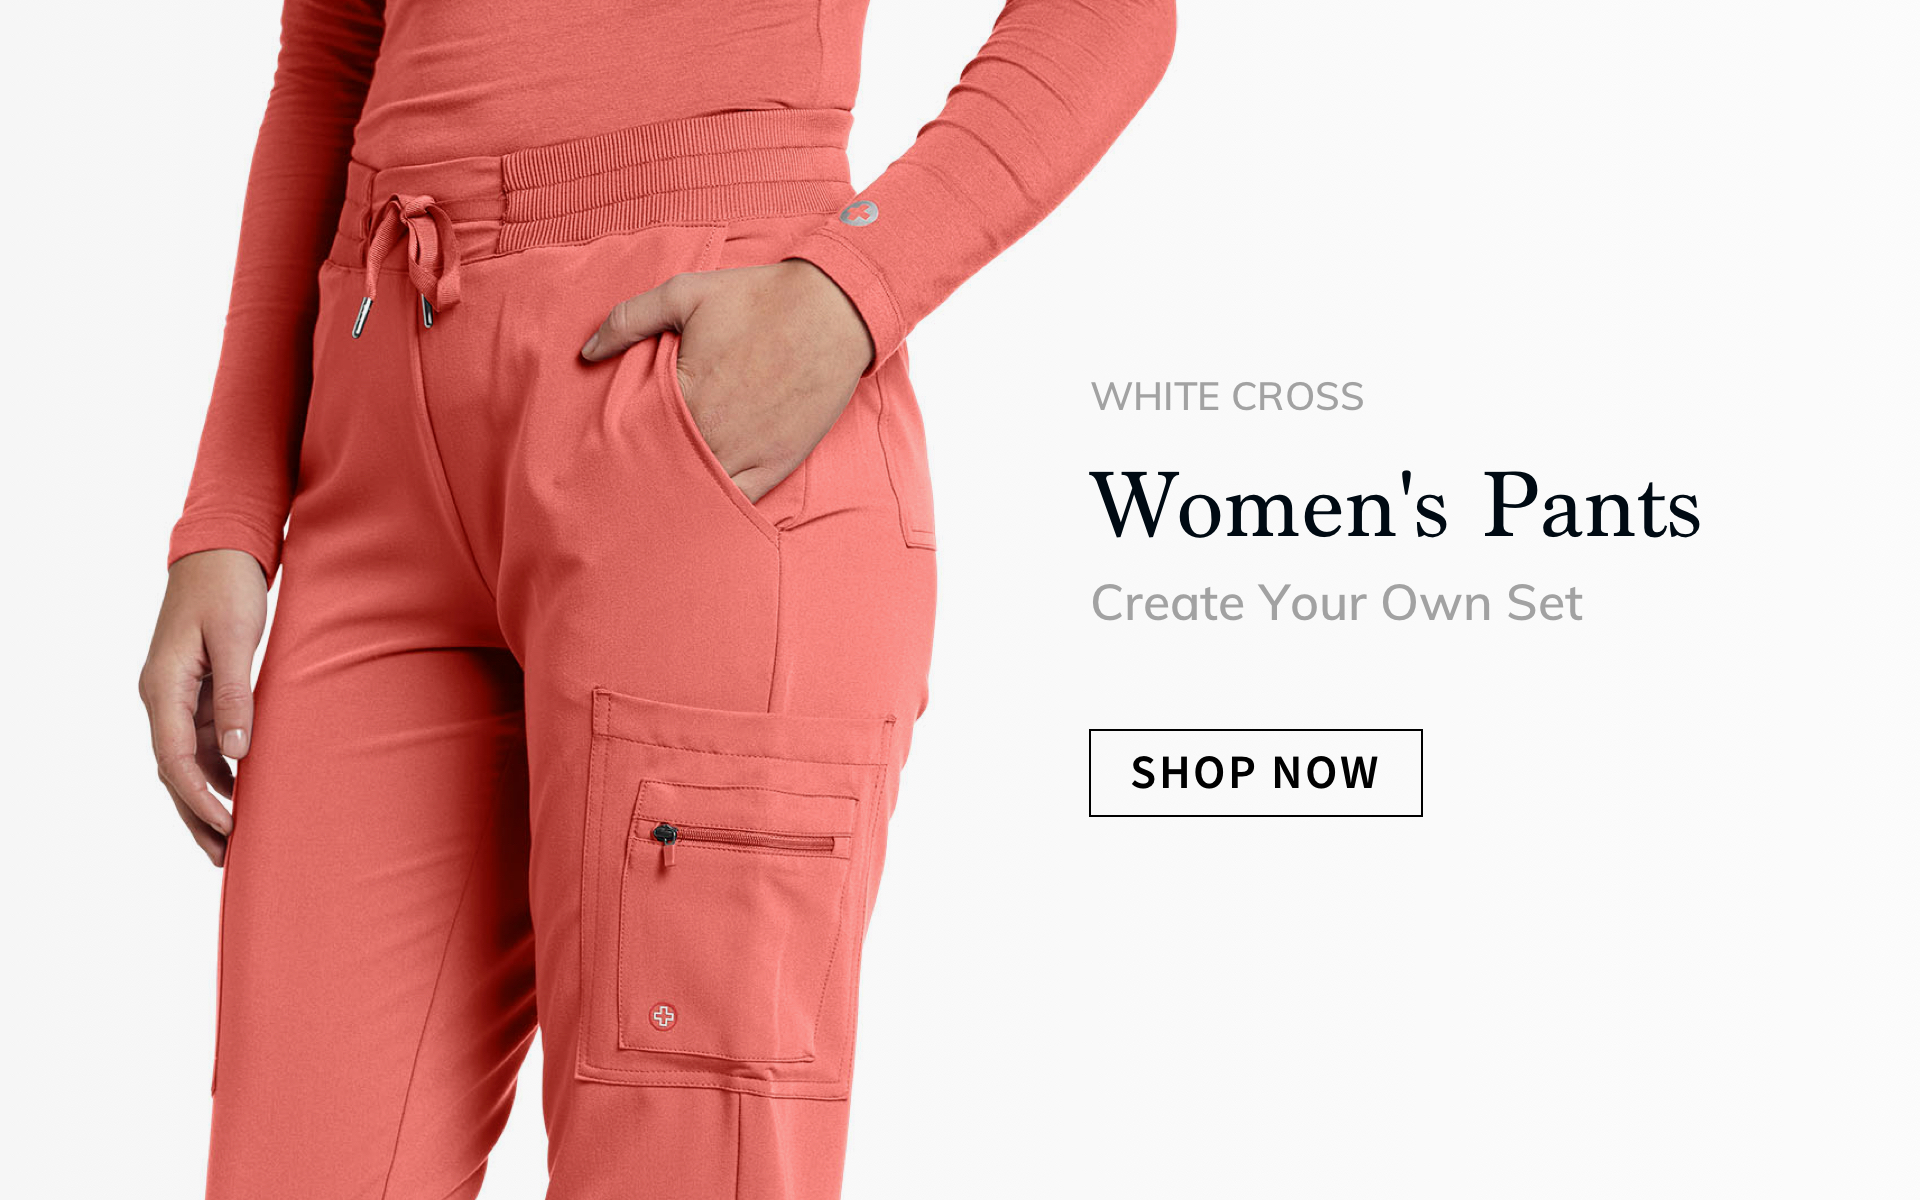 click to shop white cross women's pants.